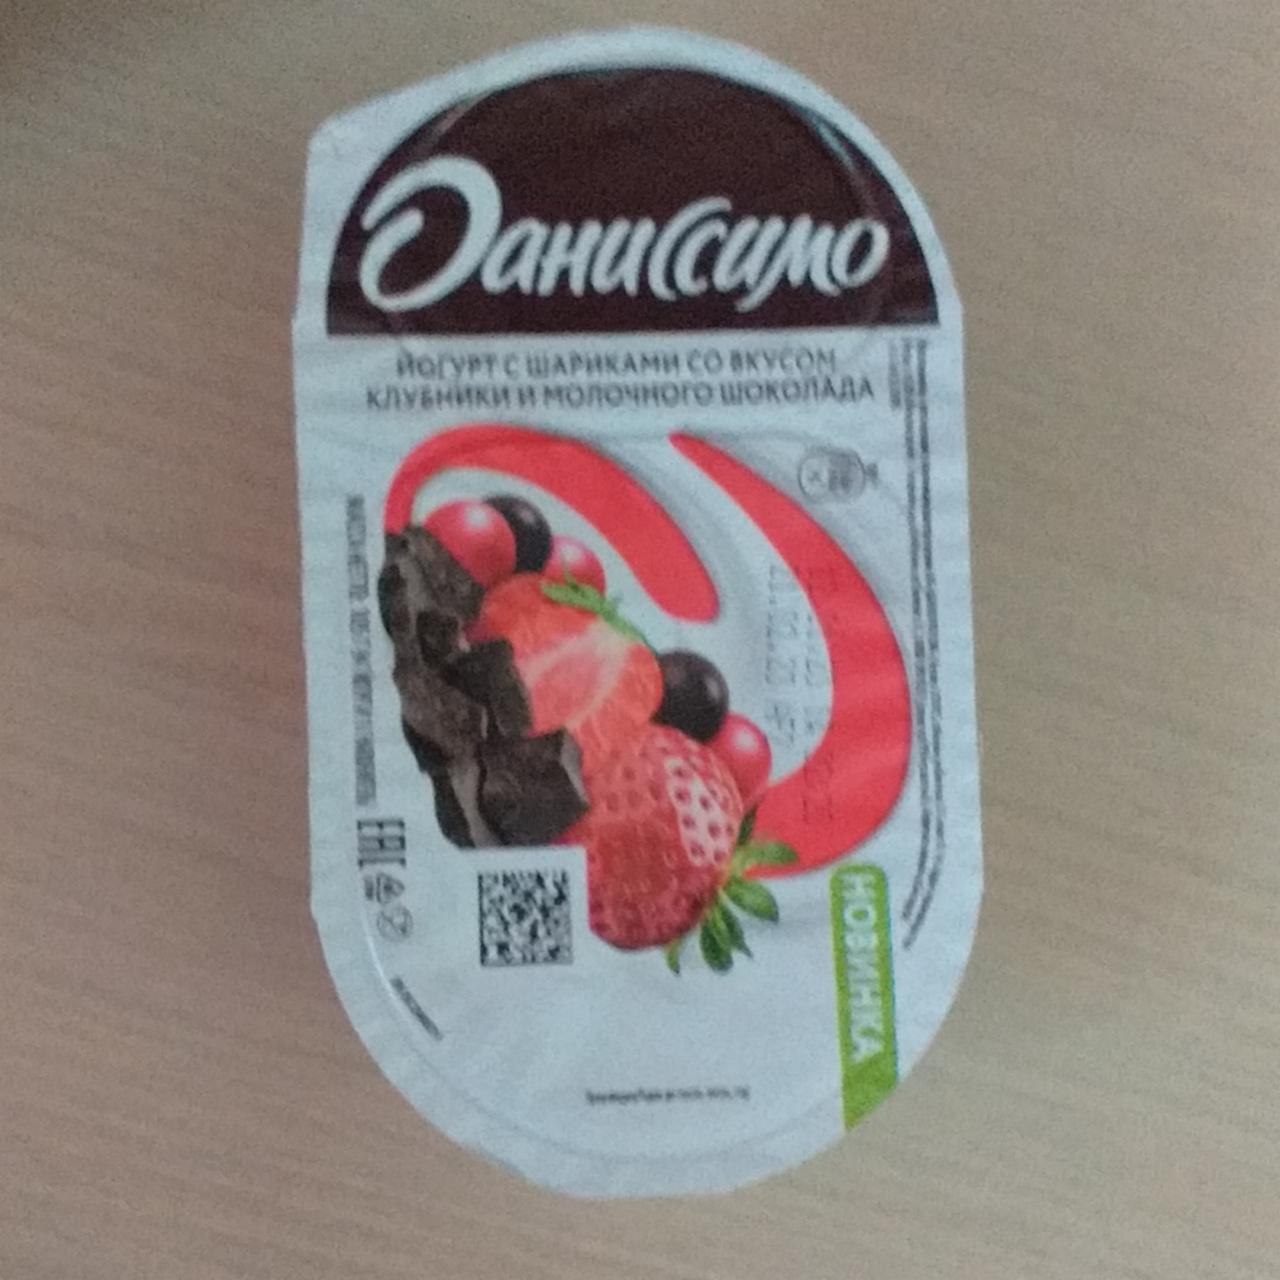 Фото - Йогурт с шариками, со вкусом клубники и молочного шоколада Даниссимо